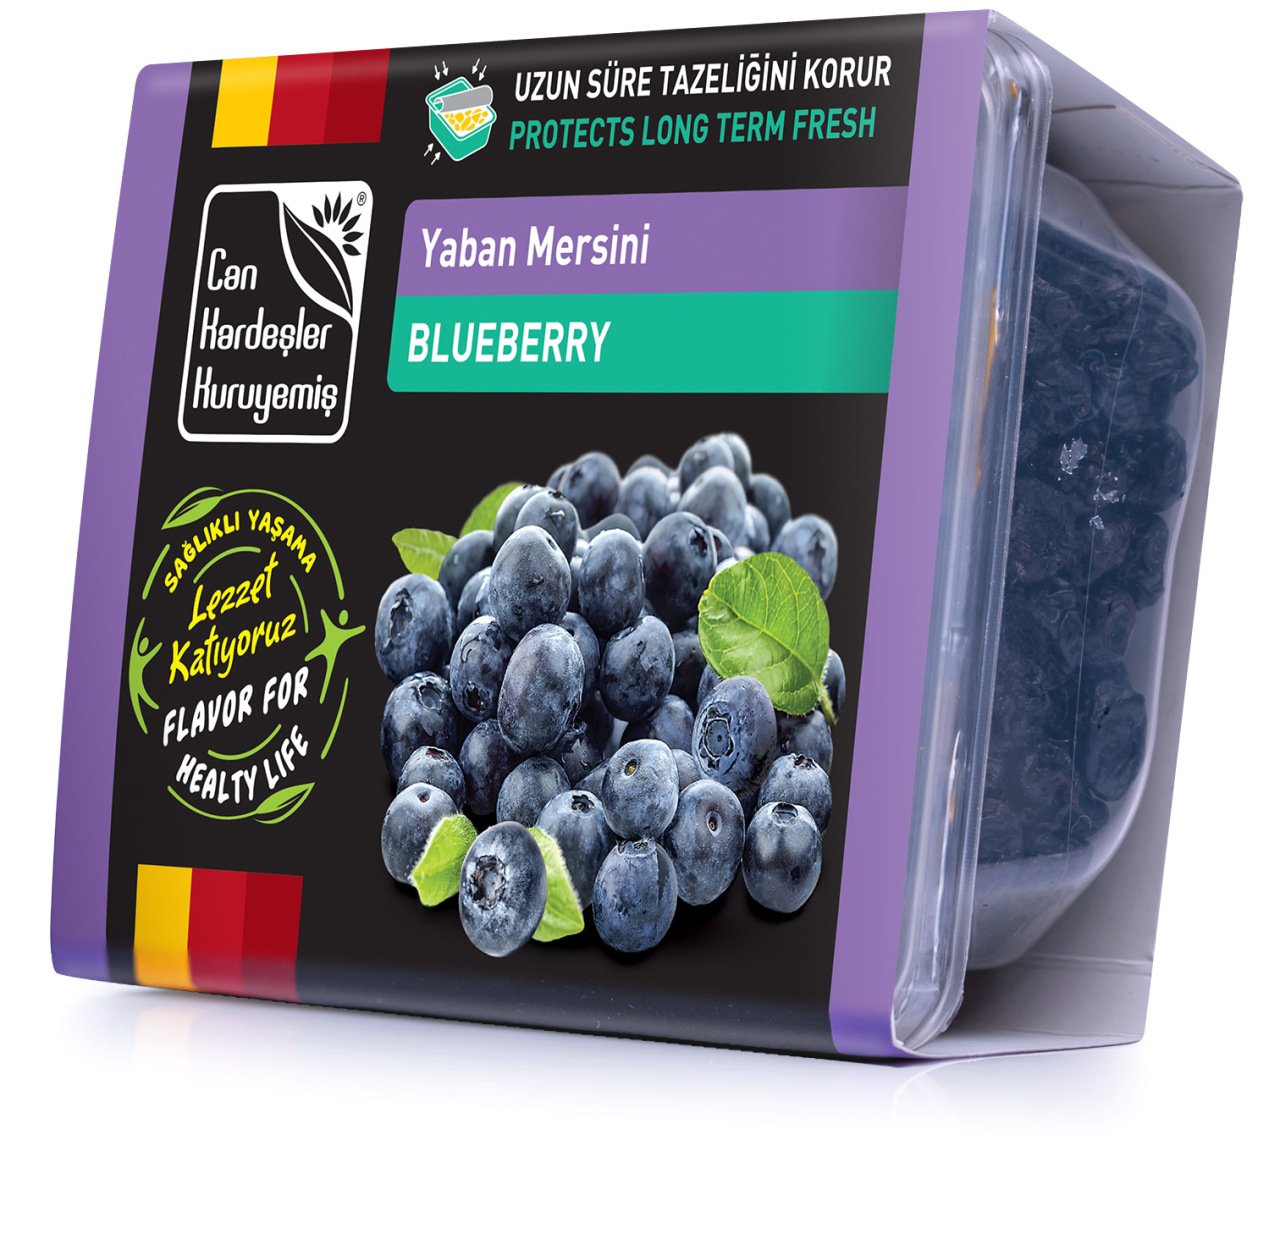 Yaban Mersini ( Blueberry ) 300 g Pkt